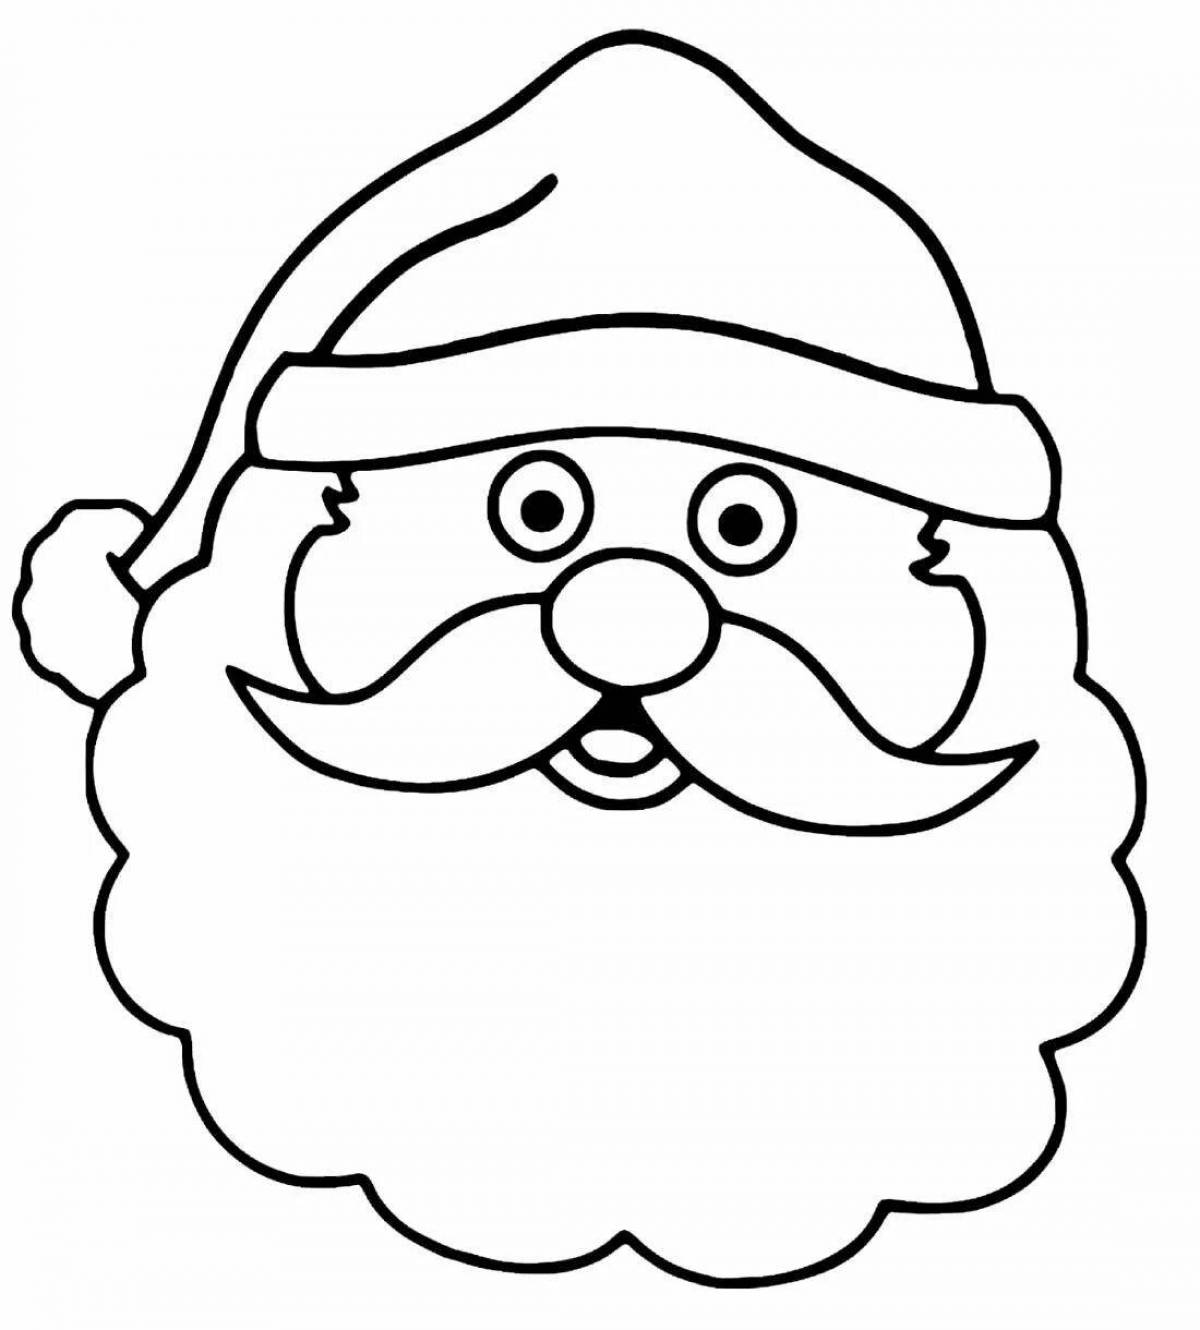 Sweet Santa head coloring page